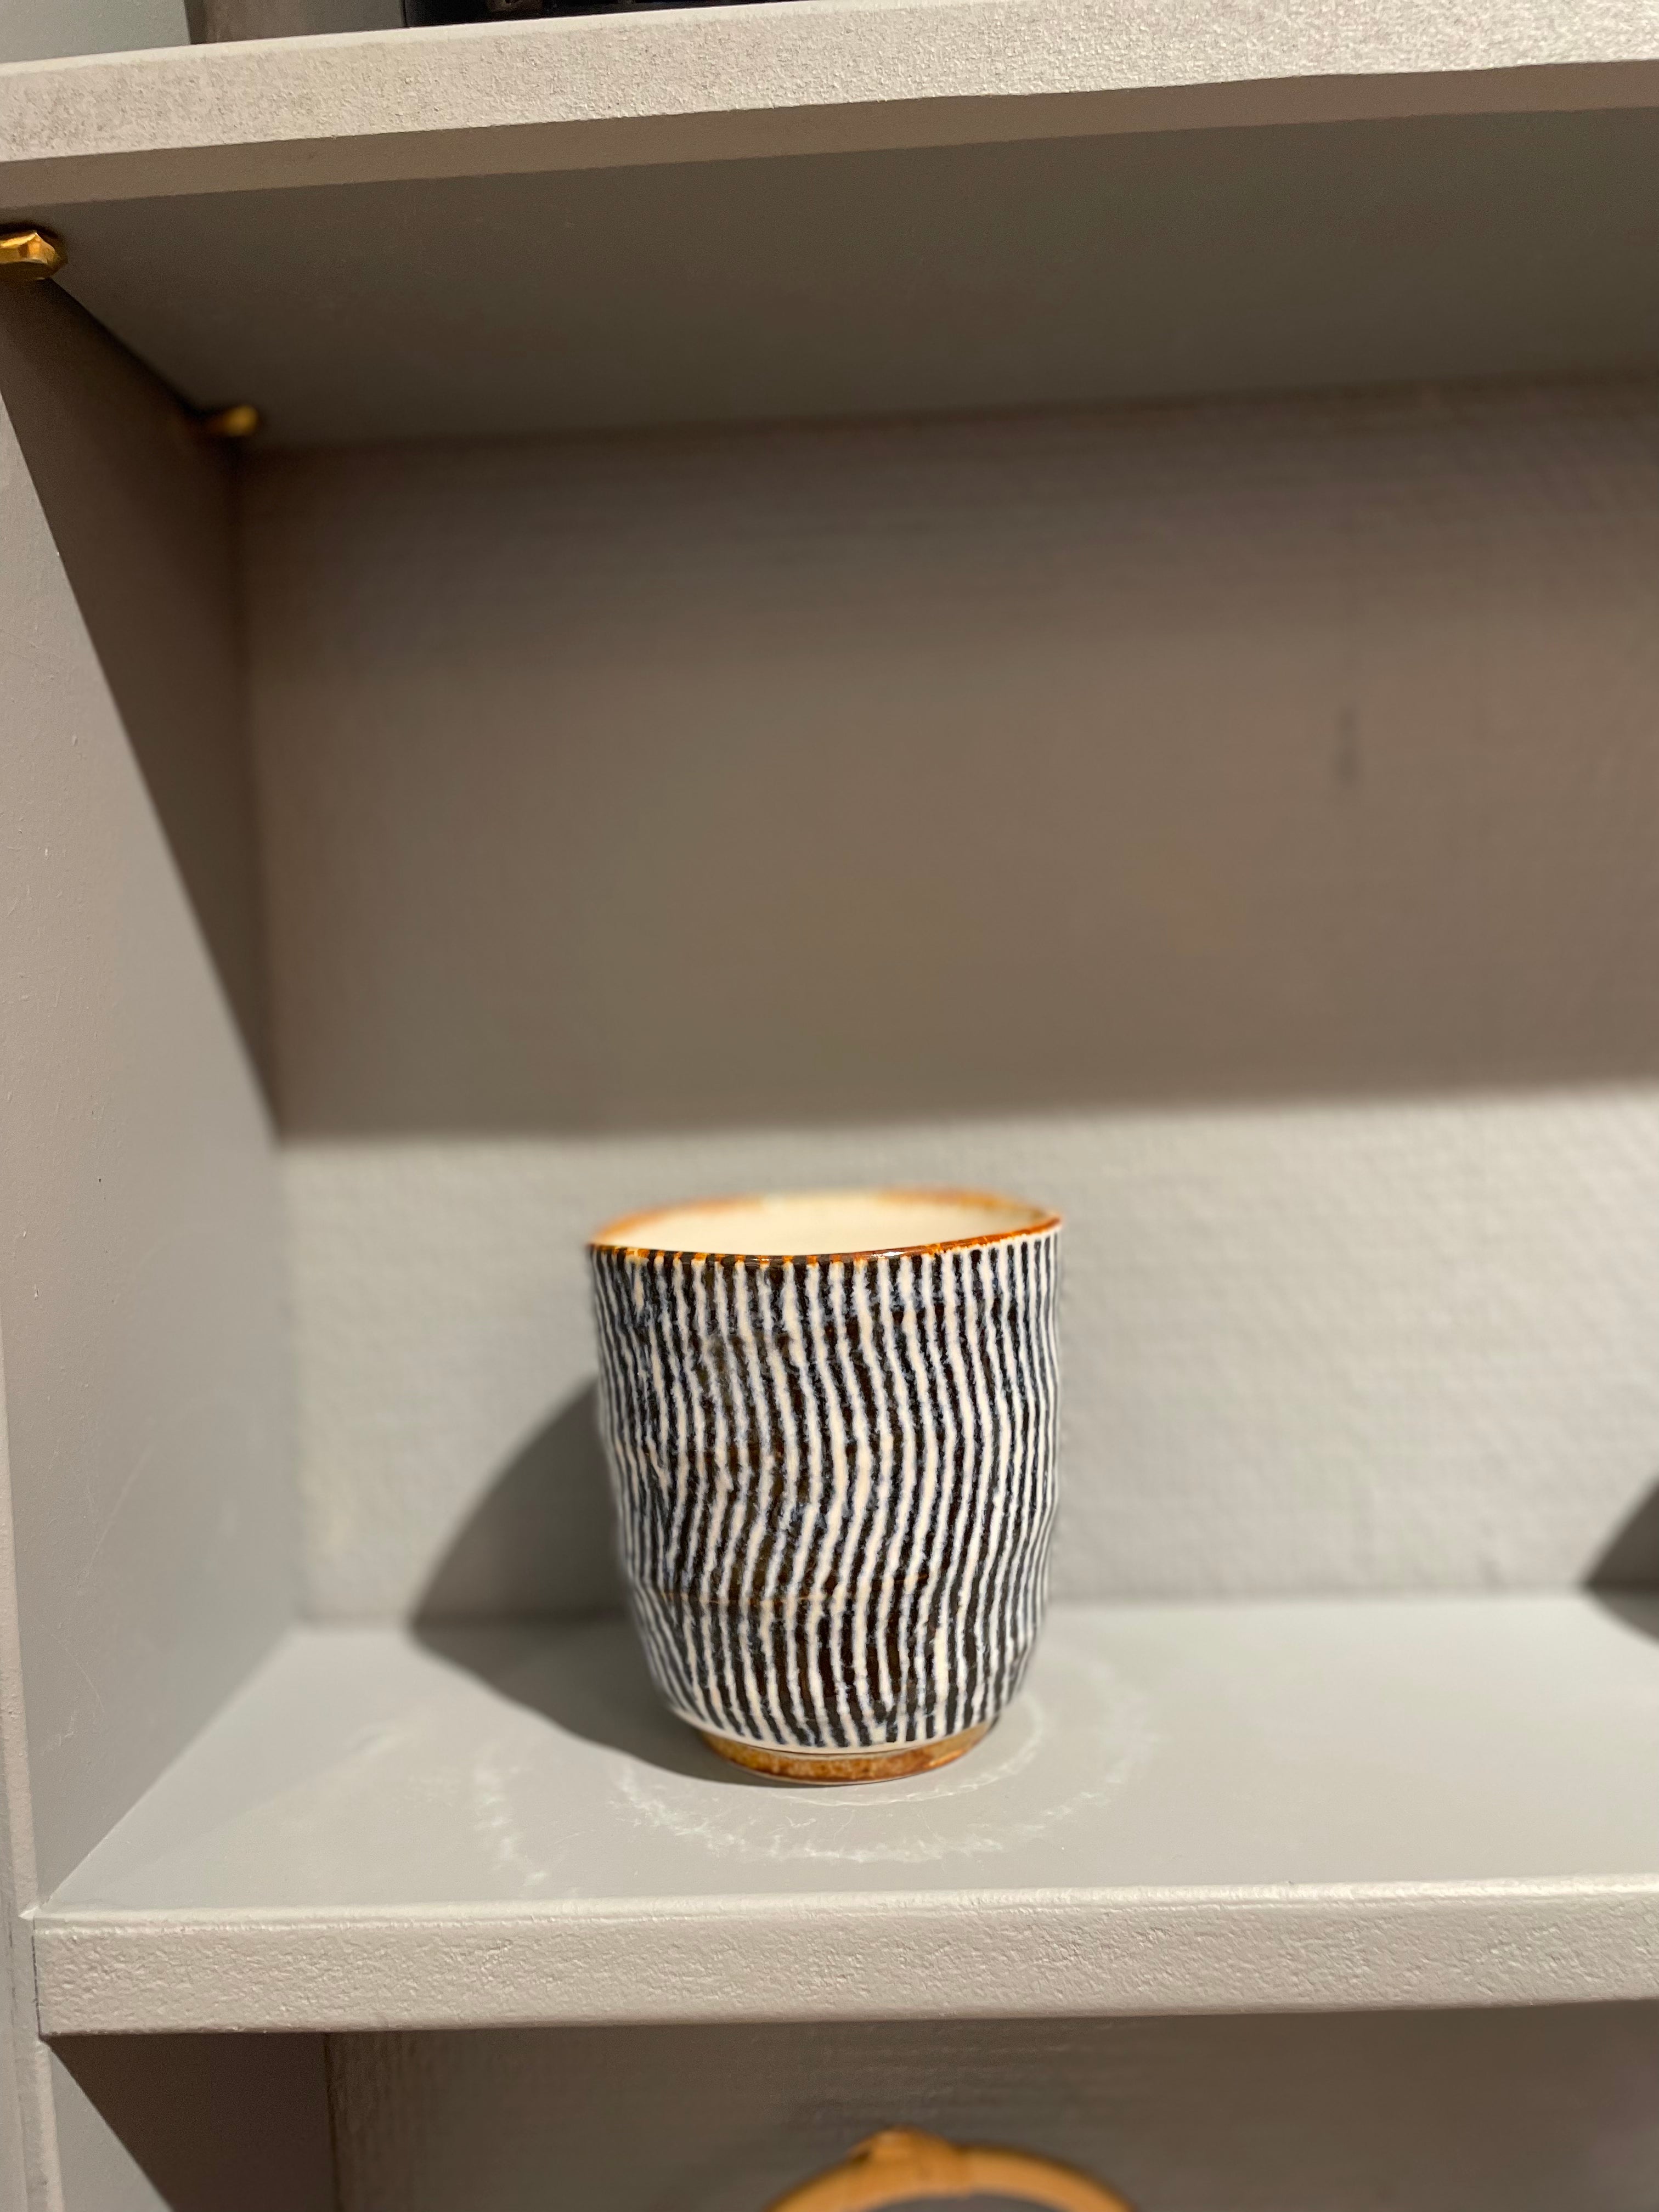 Organic mug with blue stripes